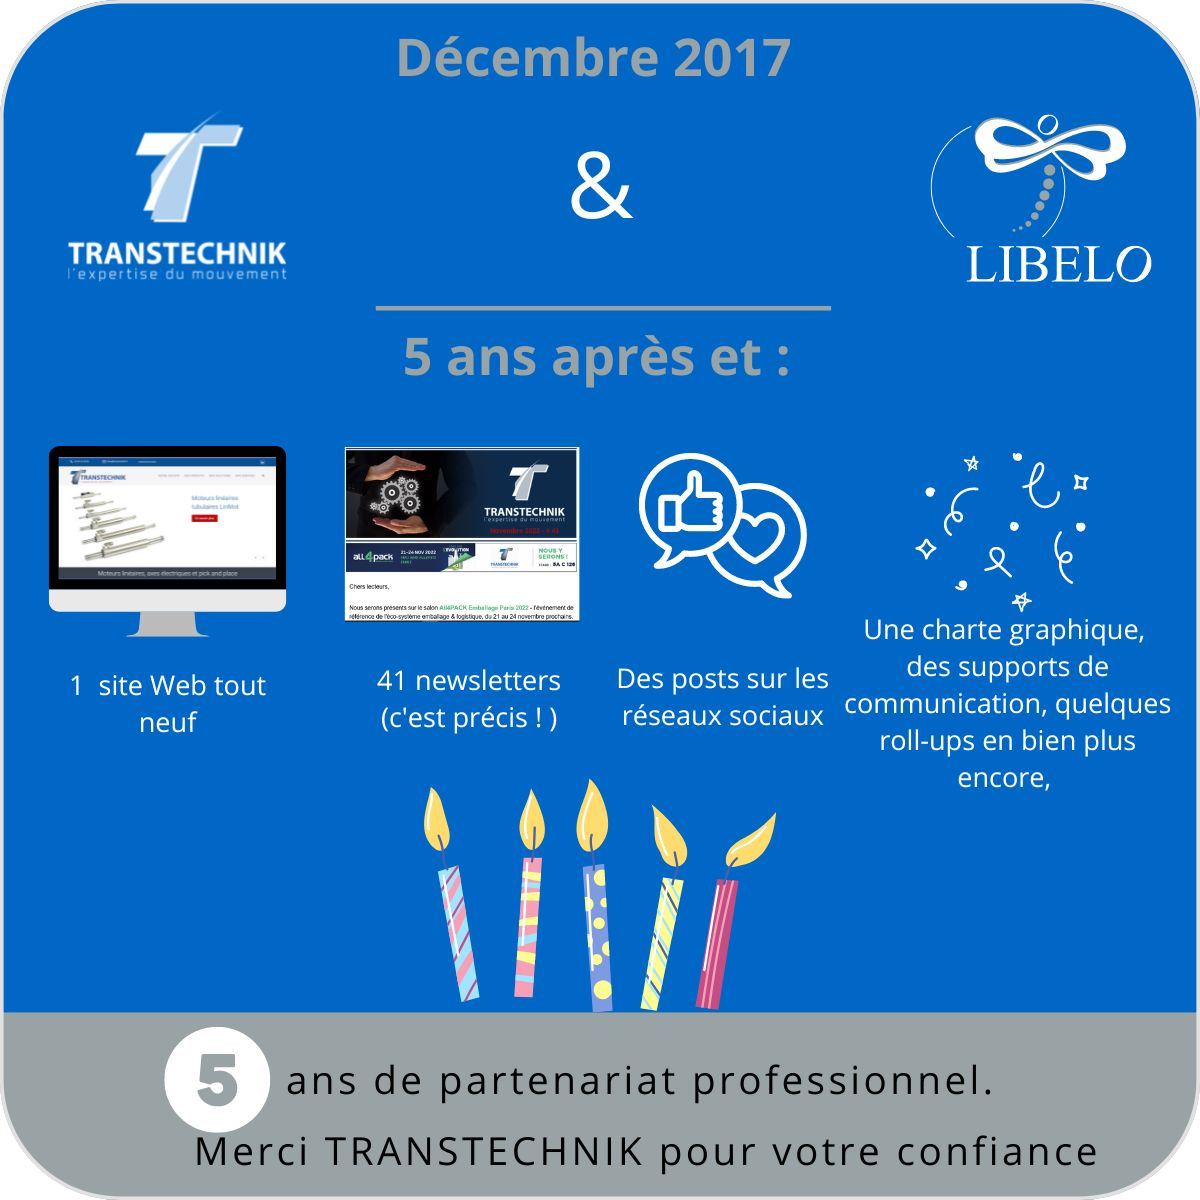 Visuel anniversaire Transtechnik Libelo 5 ans